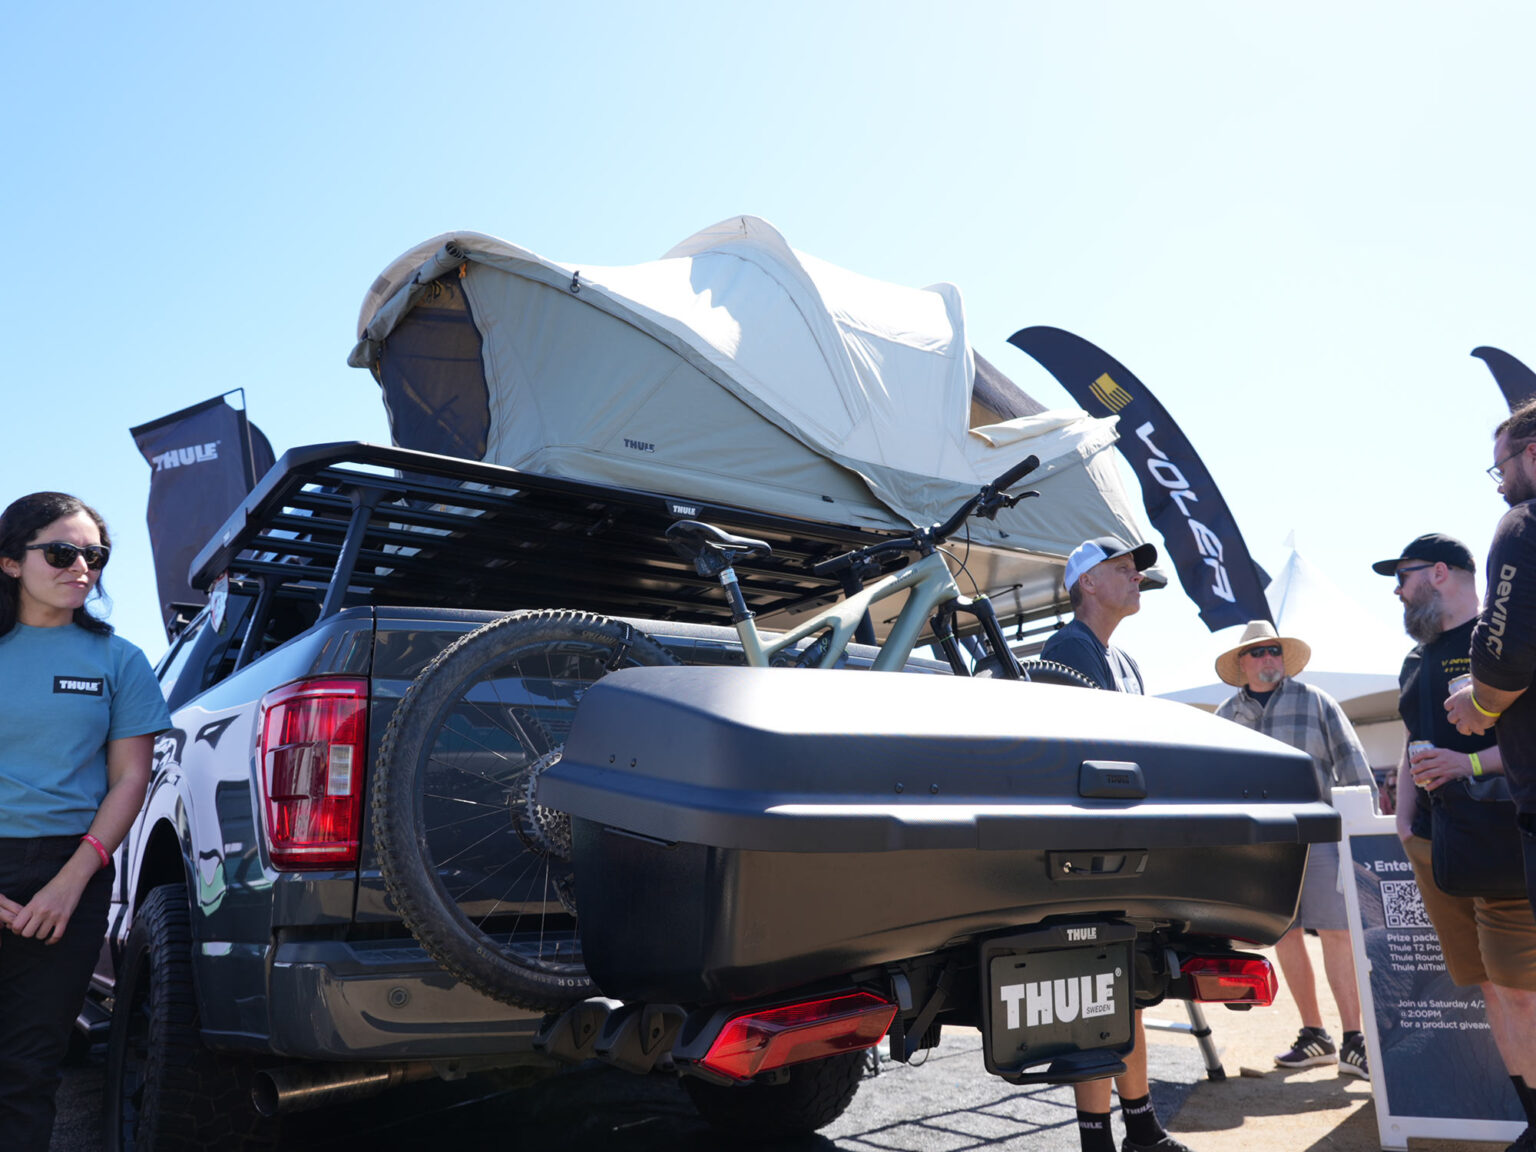 thule Santos hitch-mounted cargo case attaches to their Epos bike rack